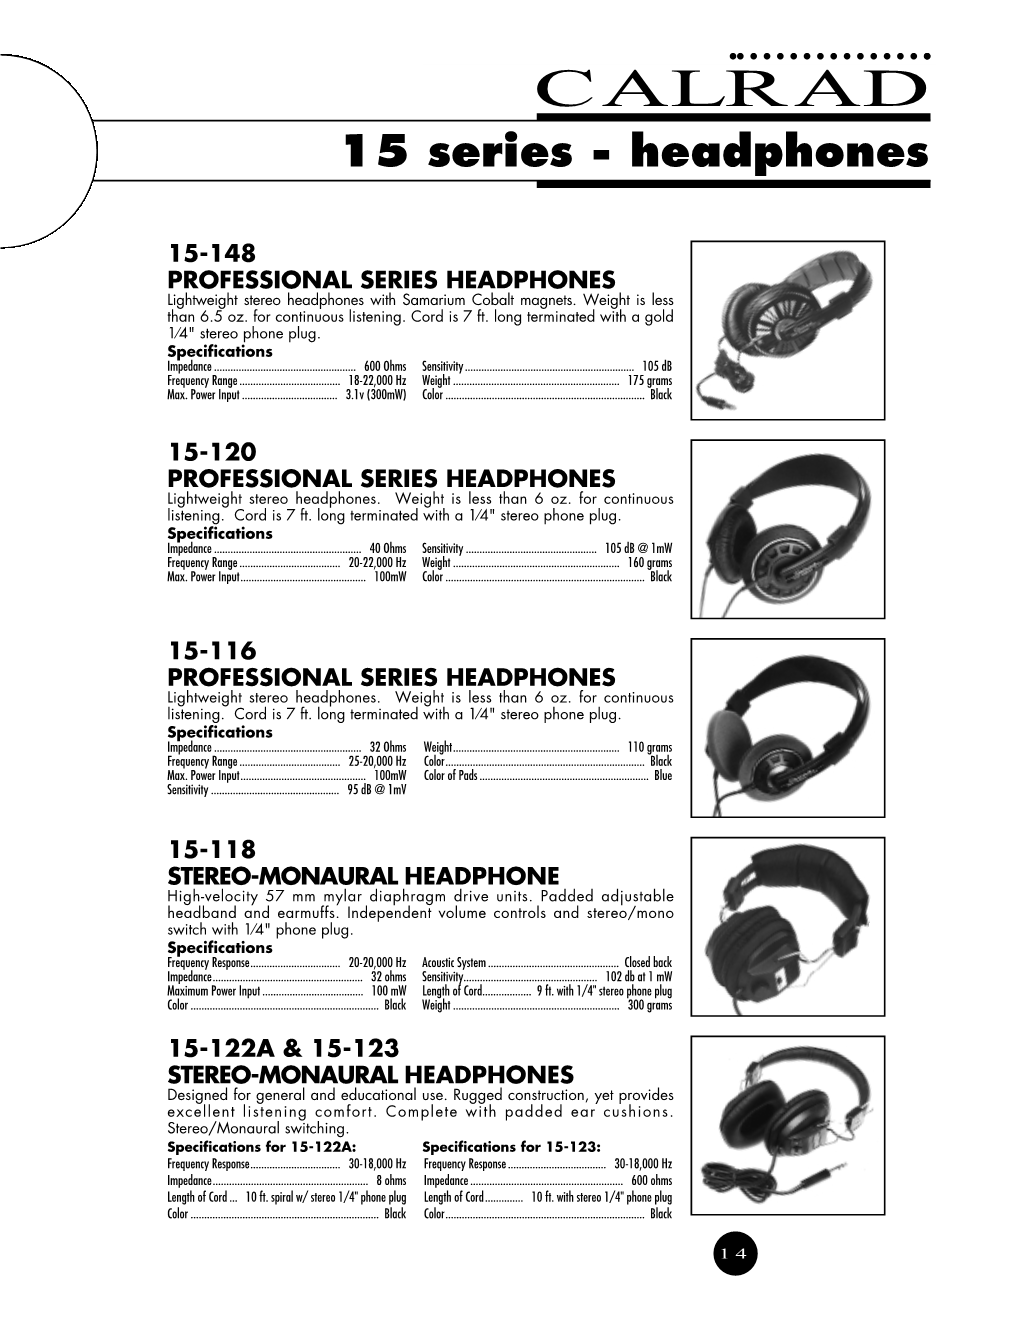 CALRAD 15 Series - Headphones